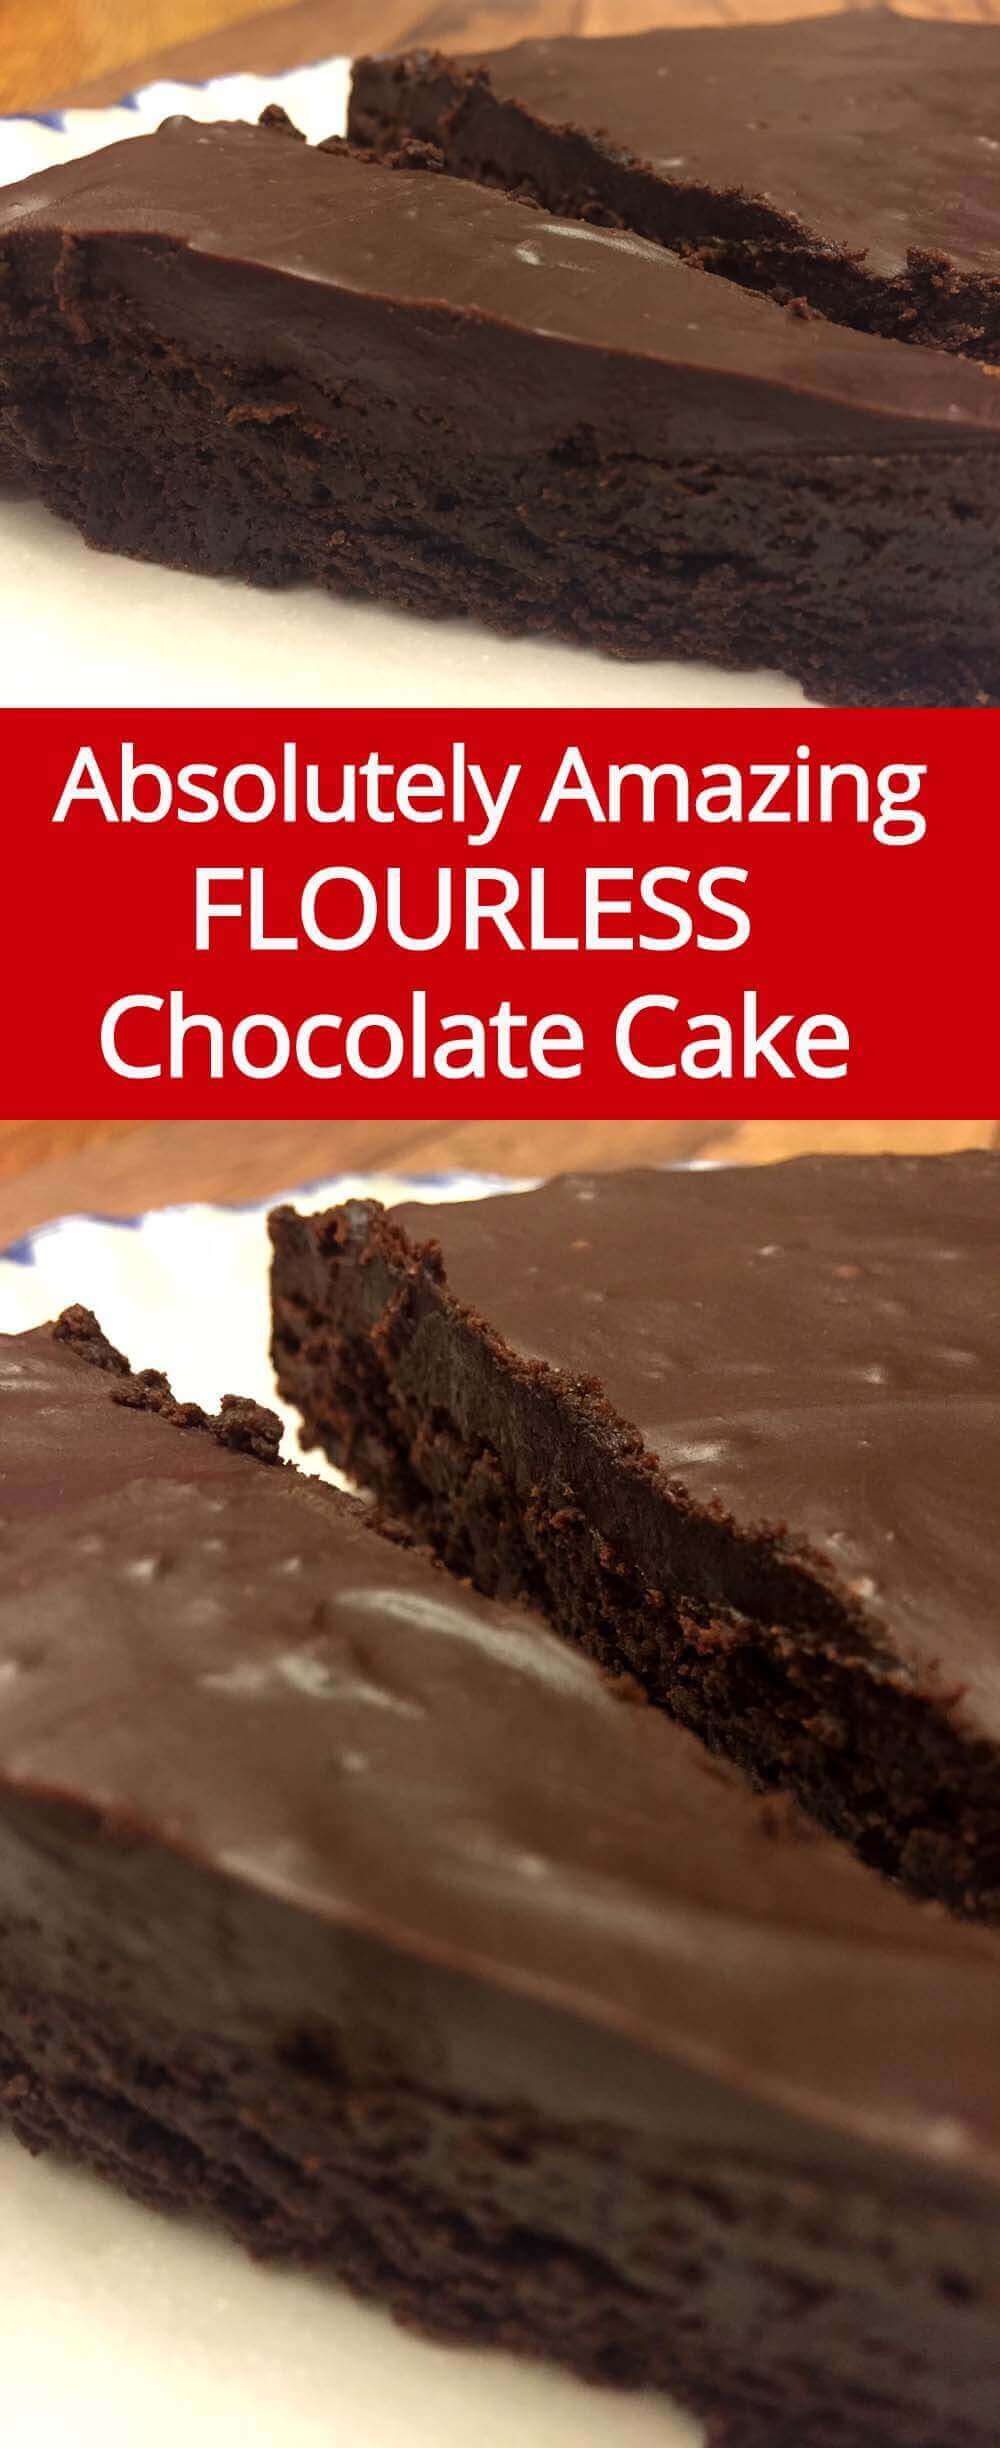 Flourless Gluten-free Chocolate Cake with Chocolate Ganache